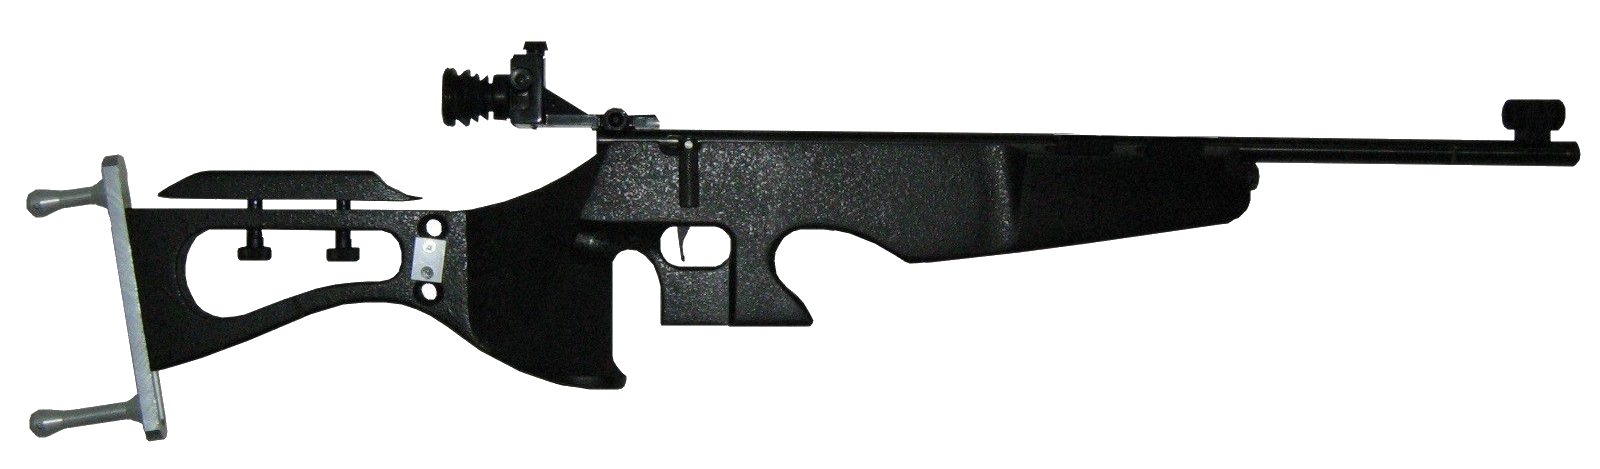 Laser rifle E-gun 223